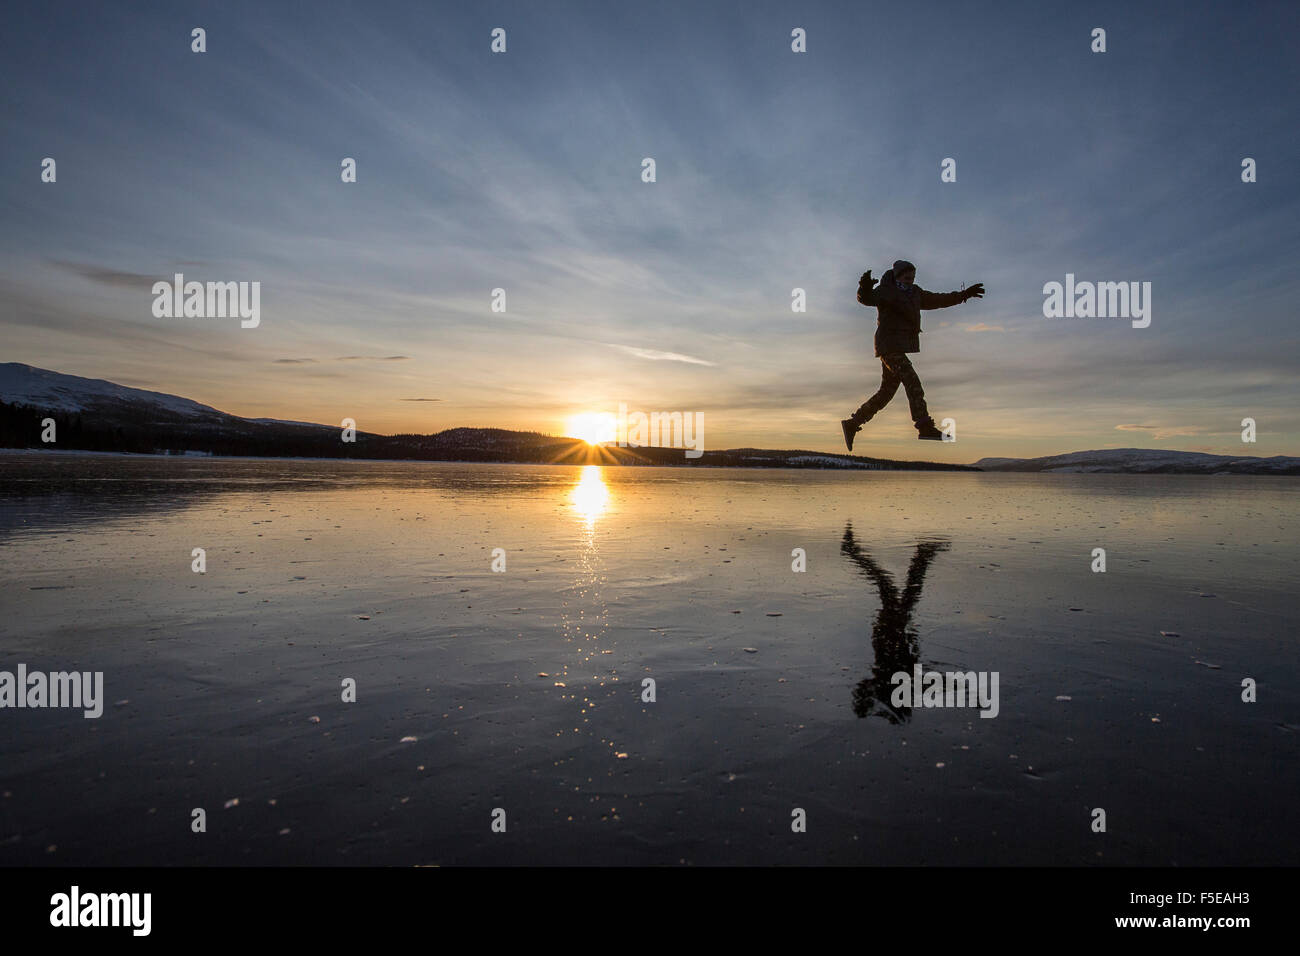 Escursionista salta sulla superficie ghiacciata del lago Limingen, Rorvik, Borgefjell National Park, il Trondelag, Norvegia, Scandinavia, Europa Foto Stock